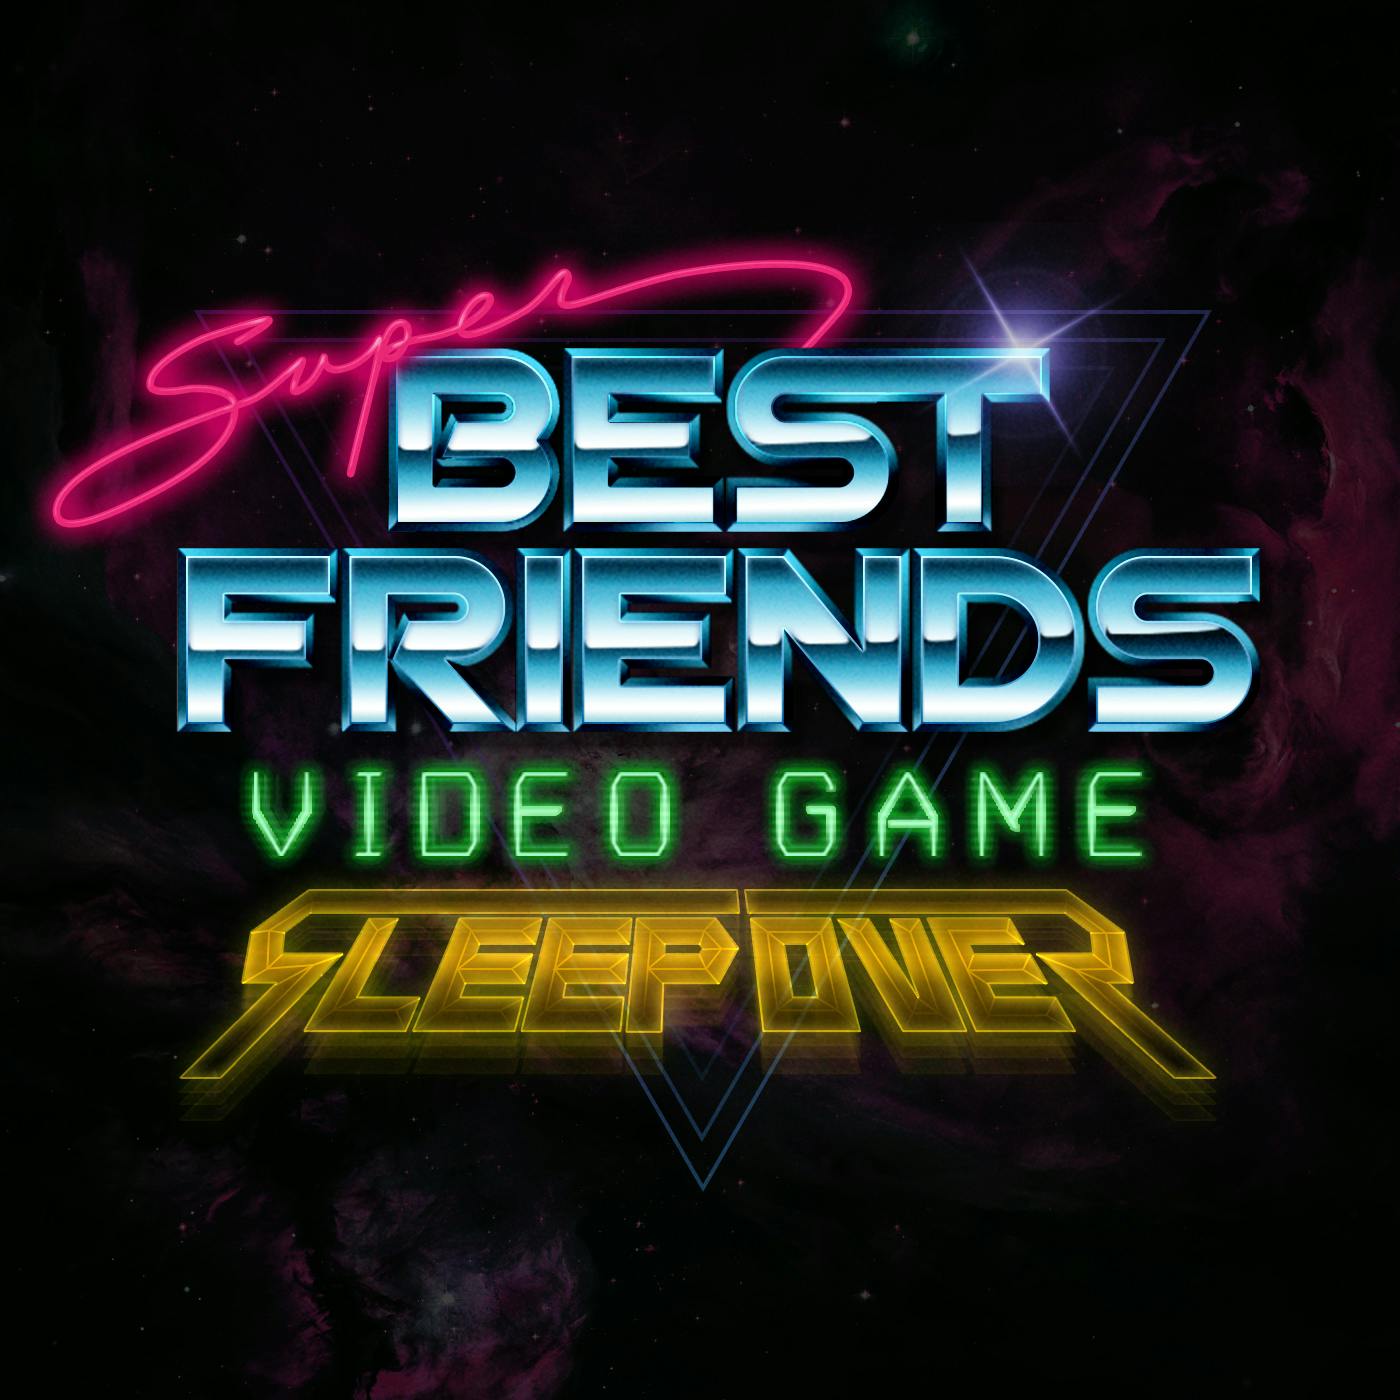 Super Best Friends Video Game Sleepover - Episode 32